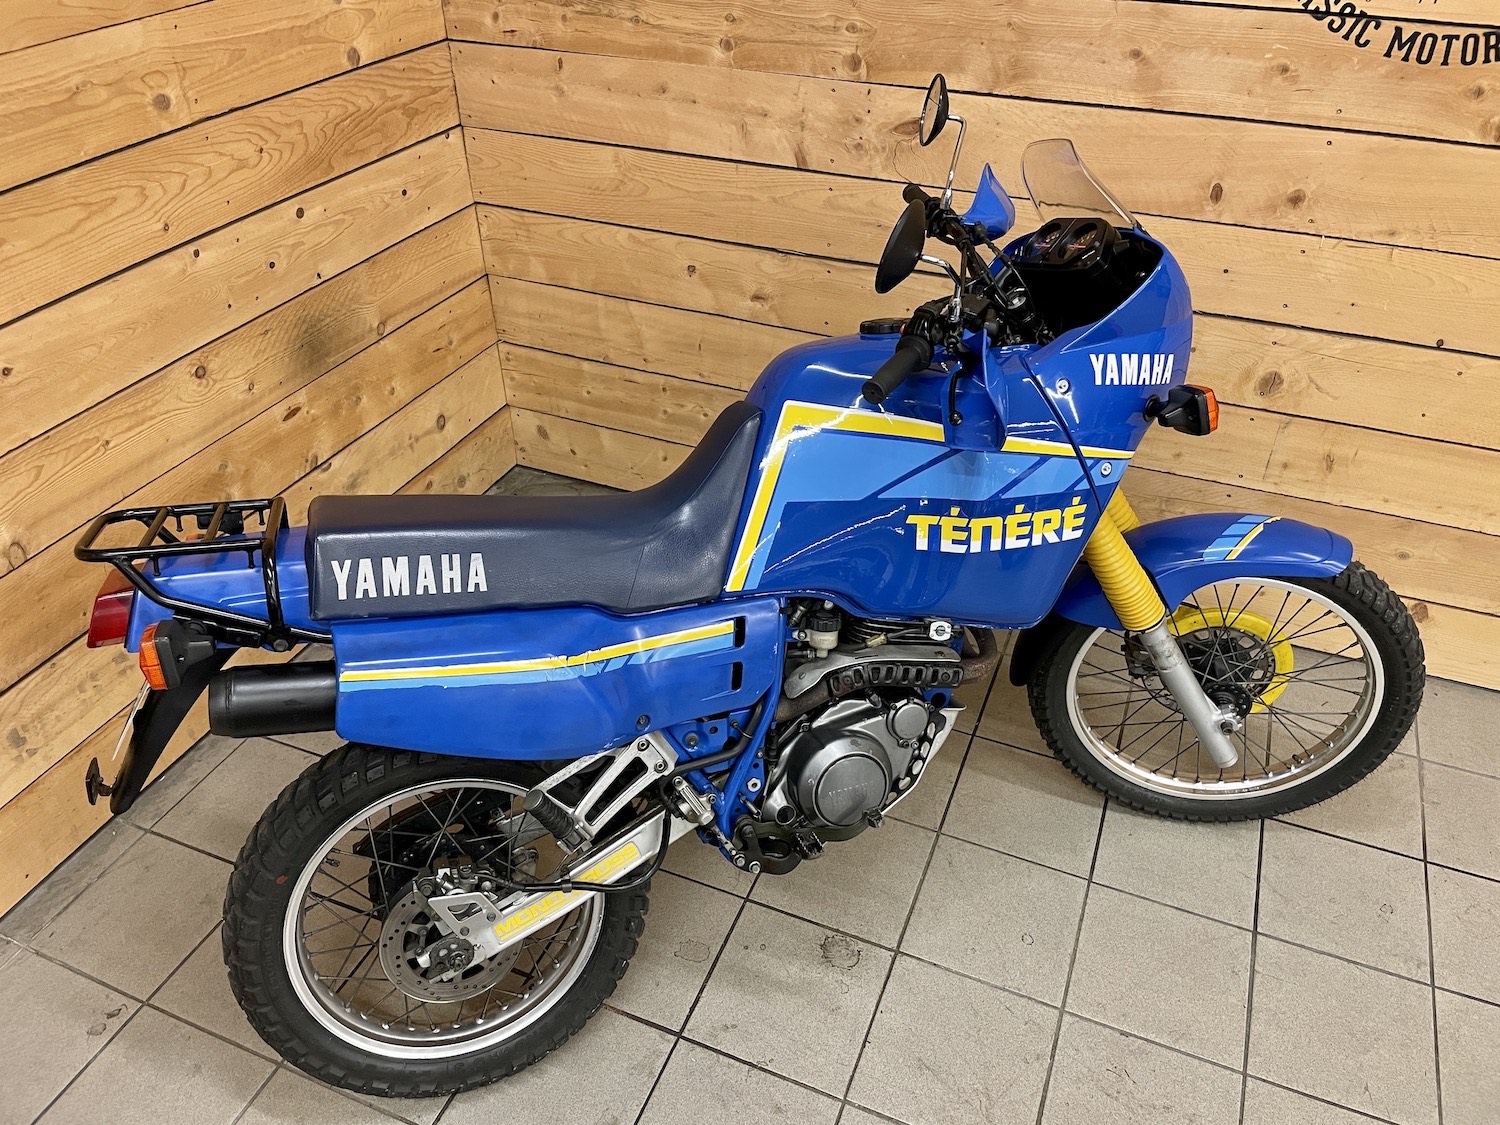 Yamaha_XT600Z_Tenere_cezanne_classic_motorcycle-114.jpg